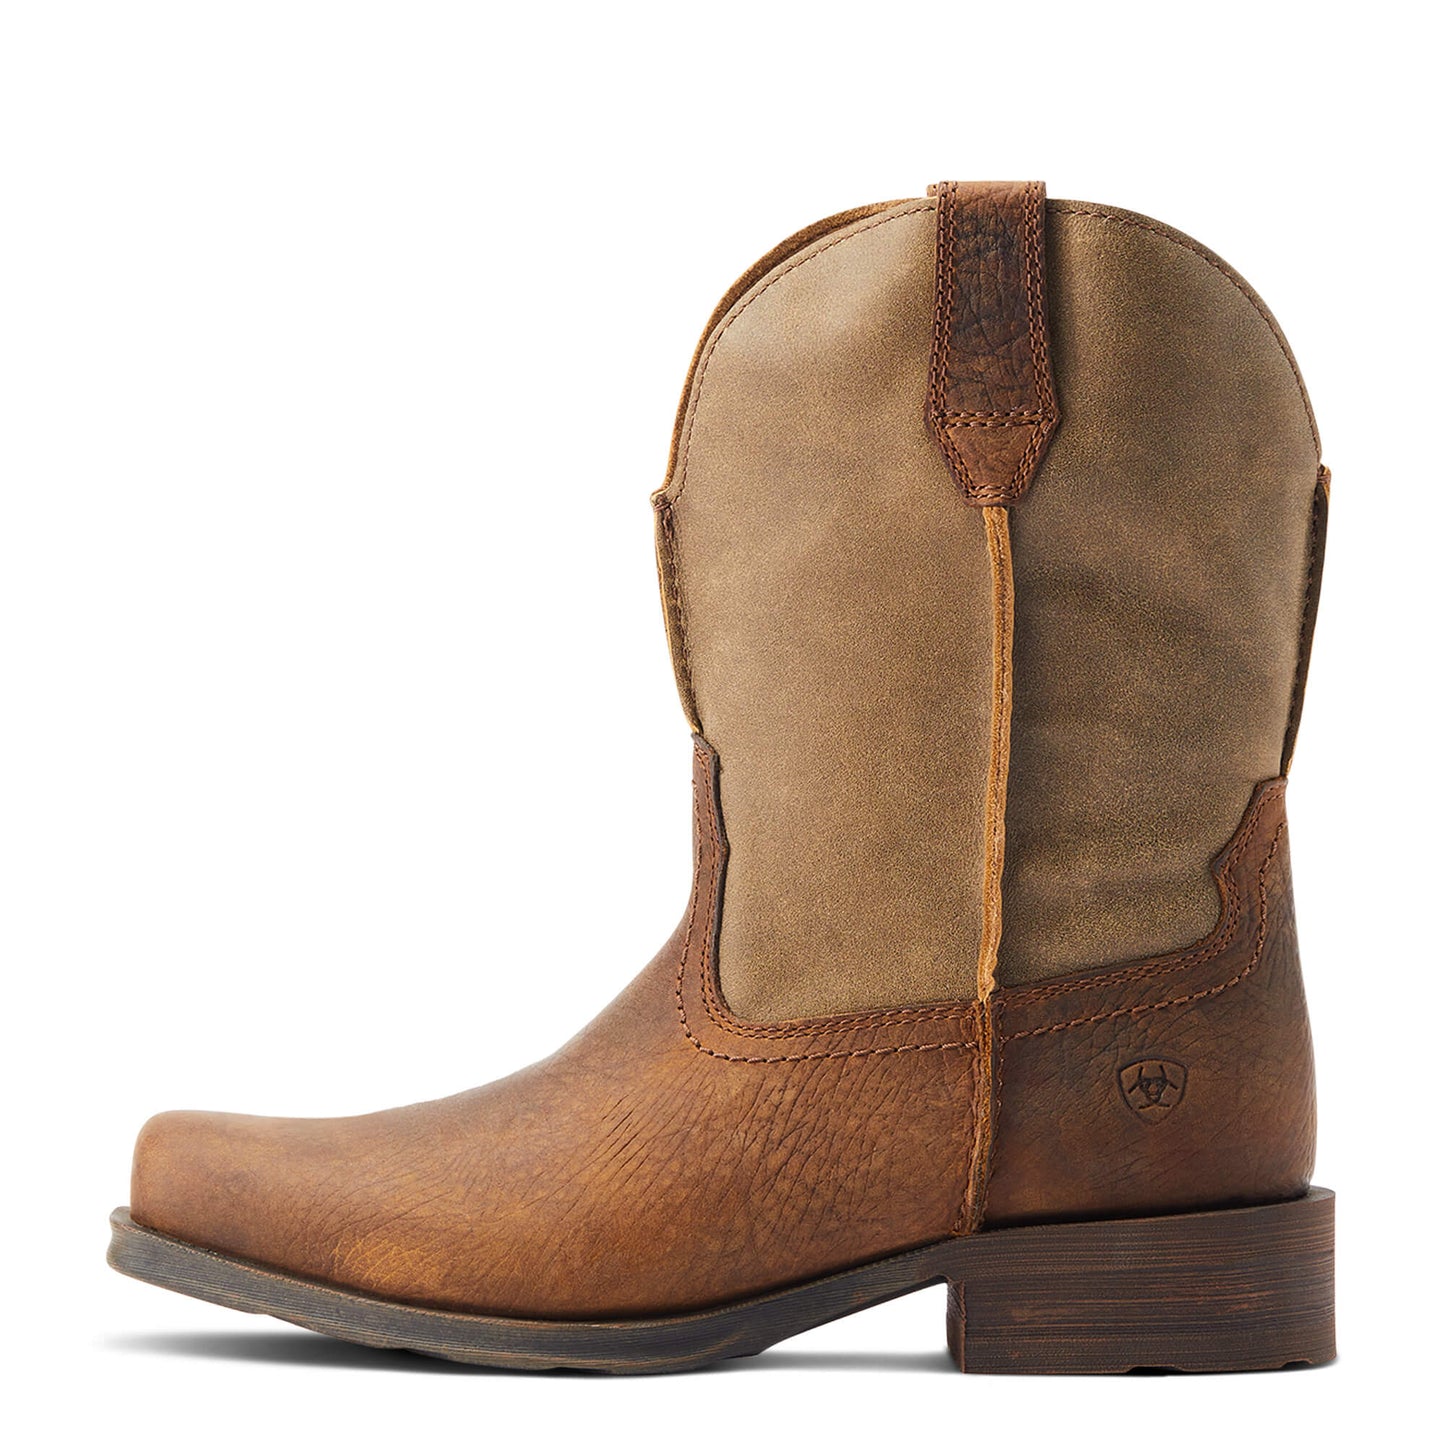 ARIAT WOMEN'S Style 10044536 Rambler Western Boots